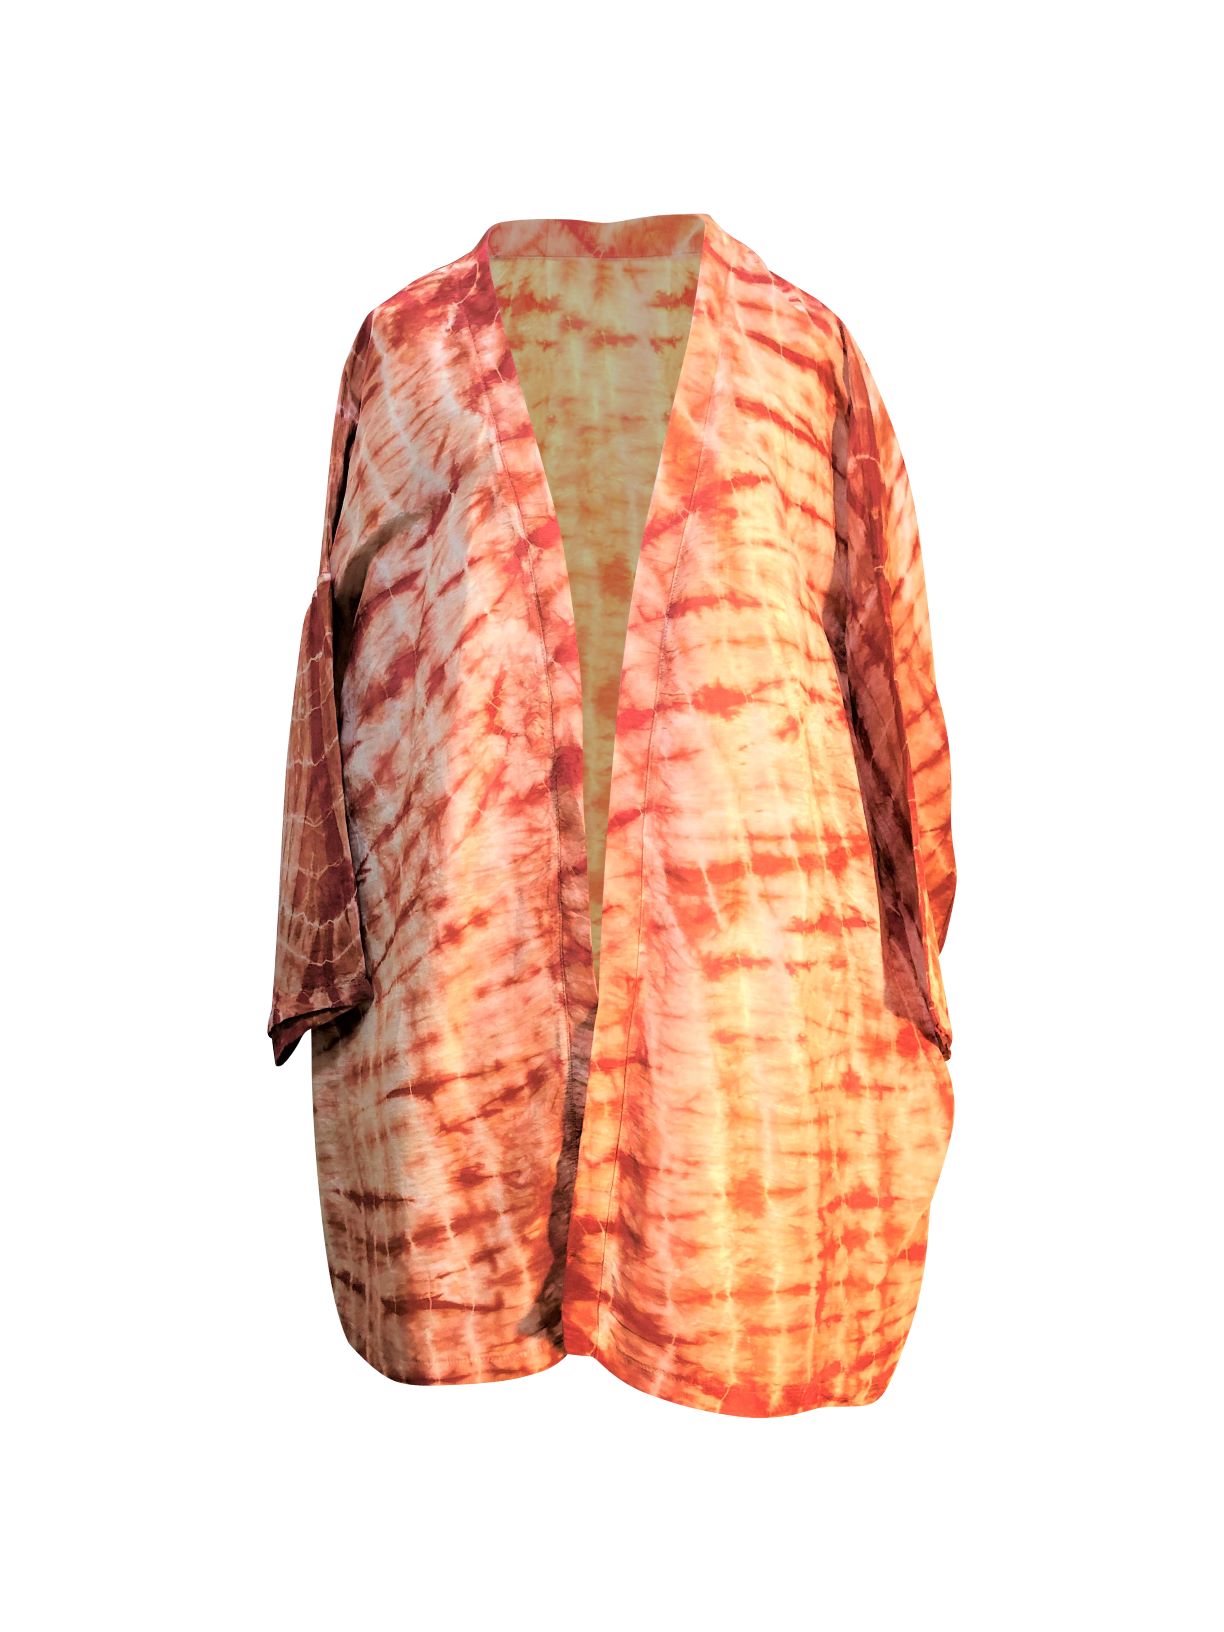 Shibori Kimono Sleeve Jacket in Copper